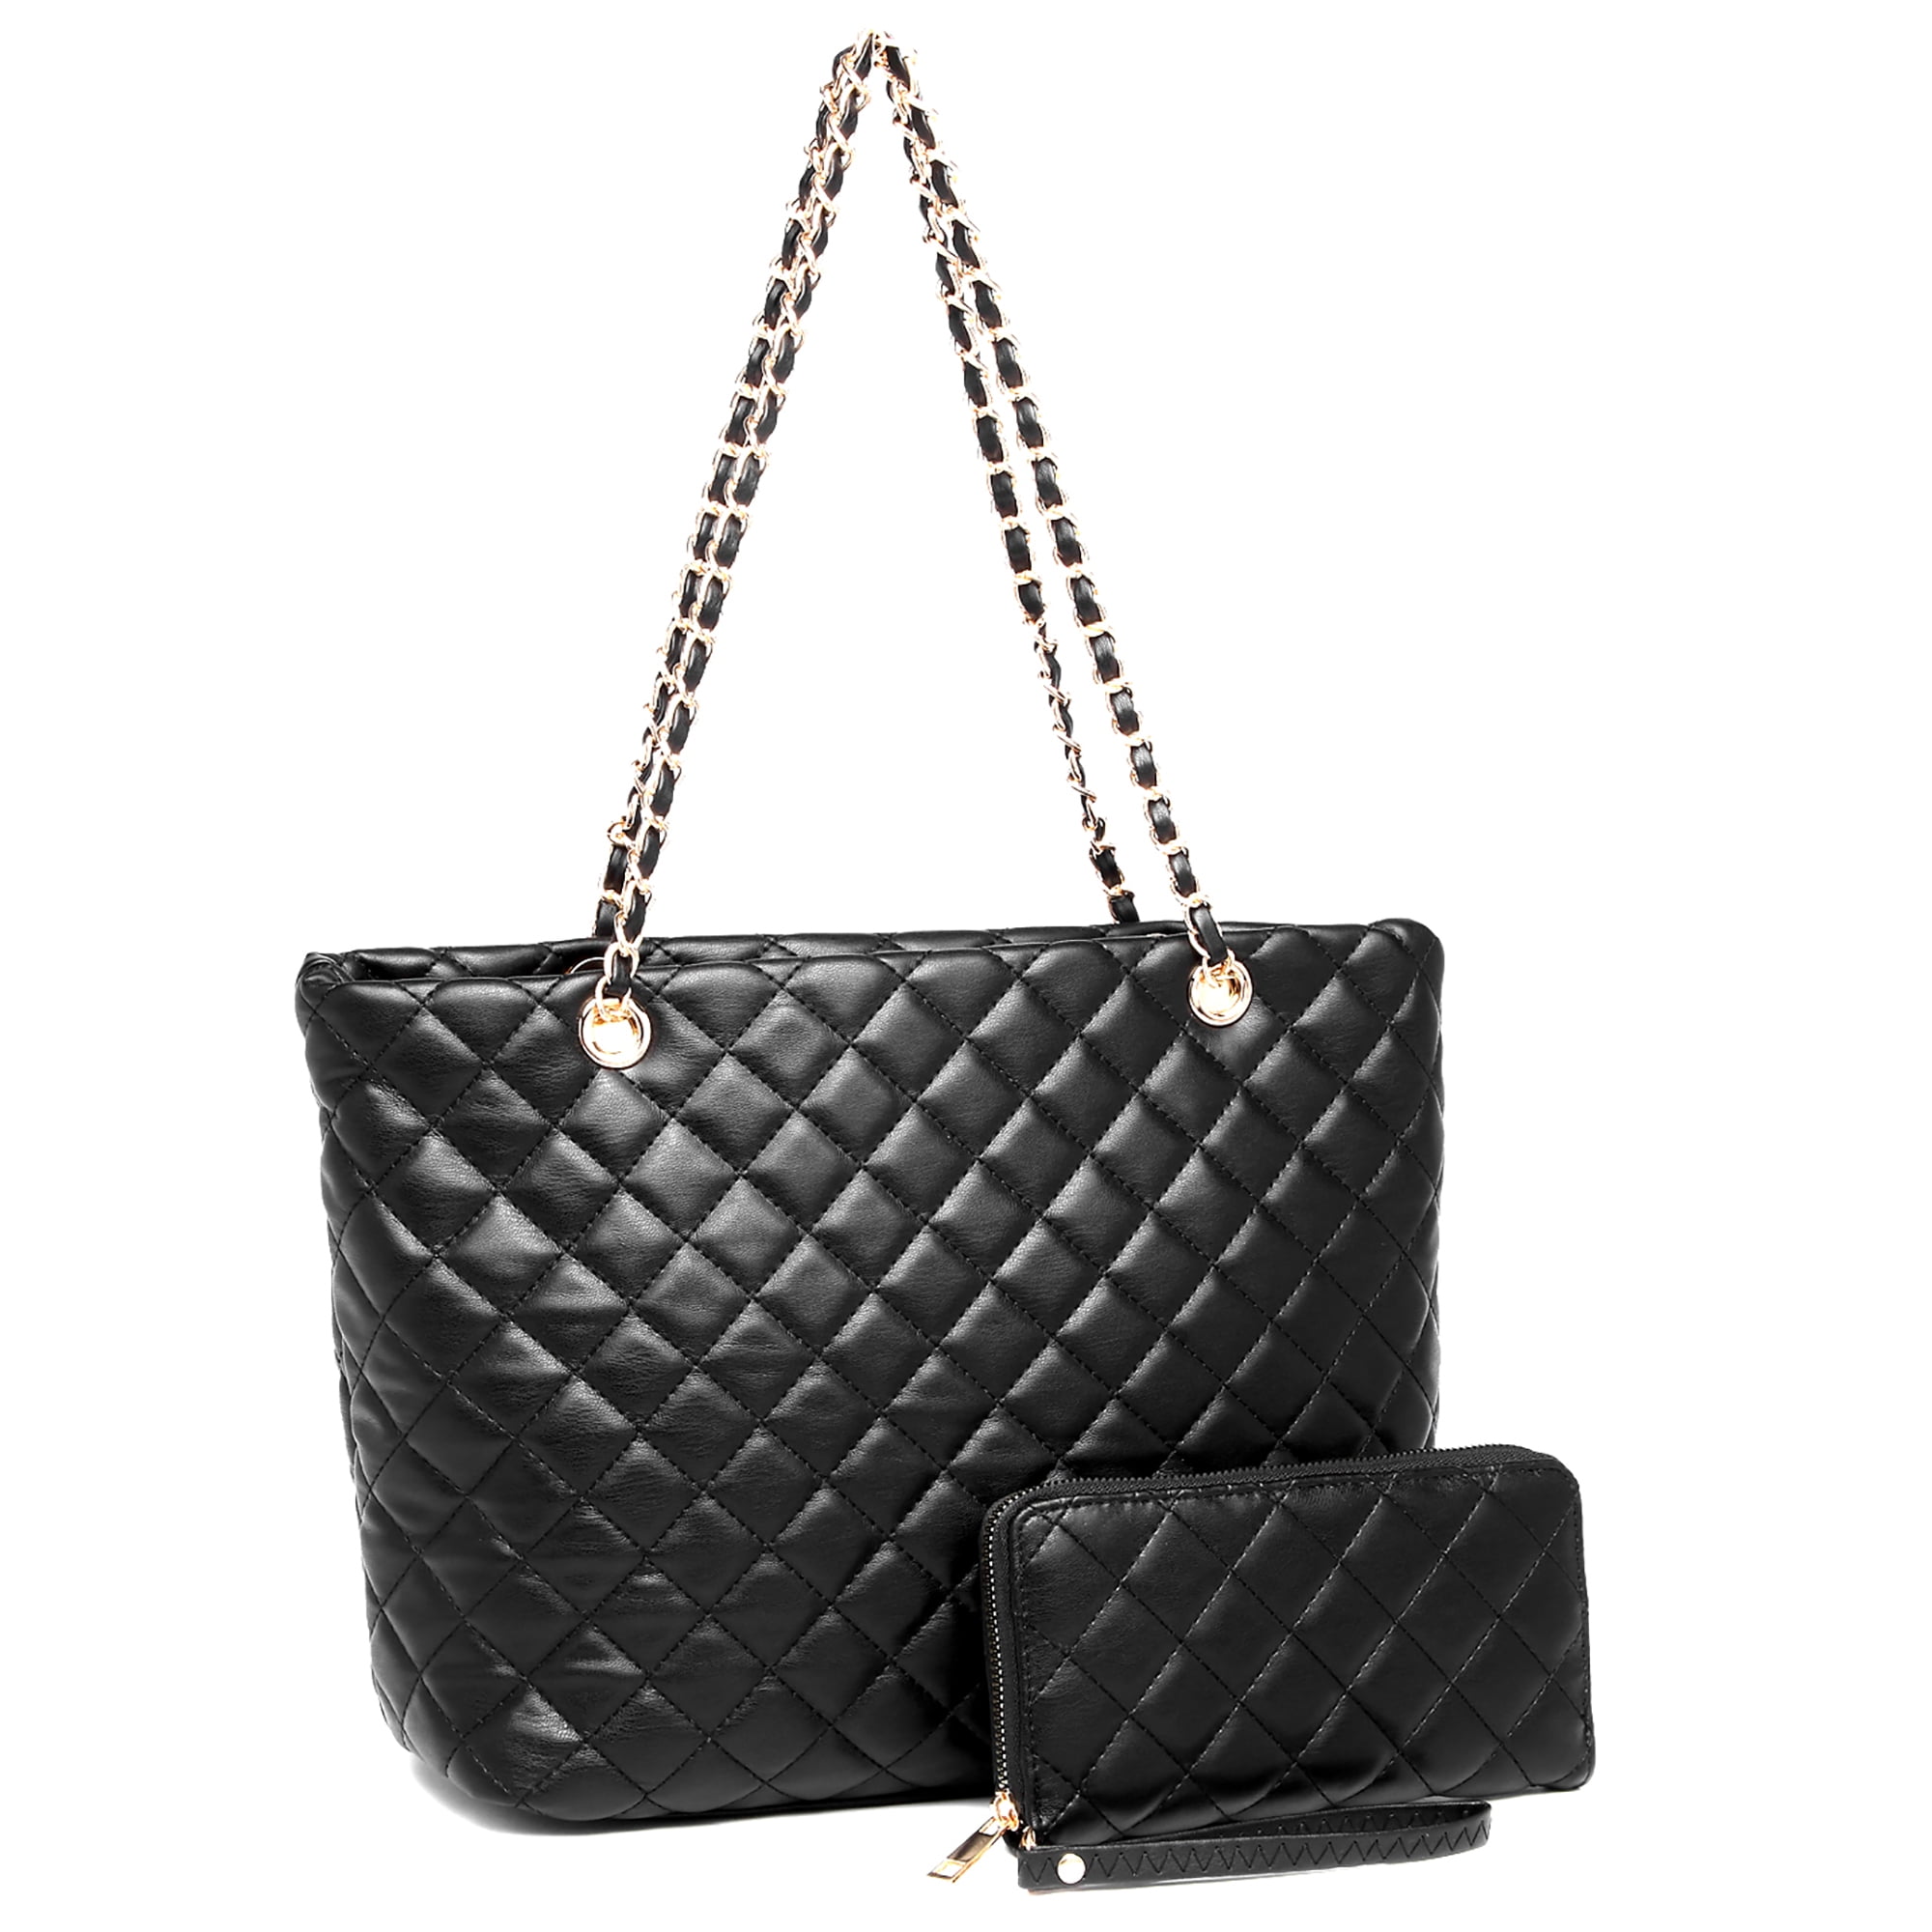 Buy A.K LEATHER Women Genuine Leather Handbags Tote Office Shoulder Bag  Medium Satchel Purse (BLACK) at Amazon.in